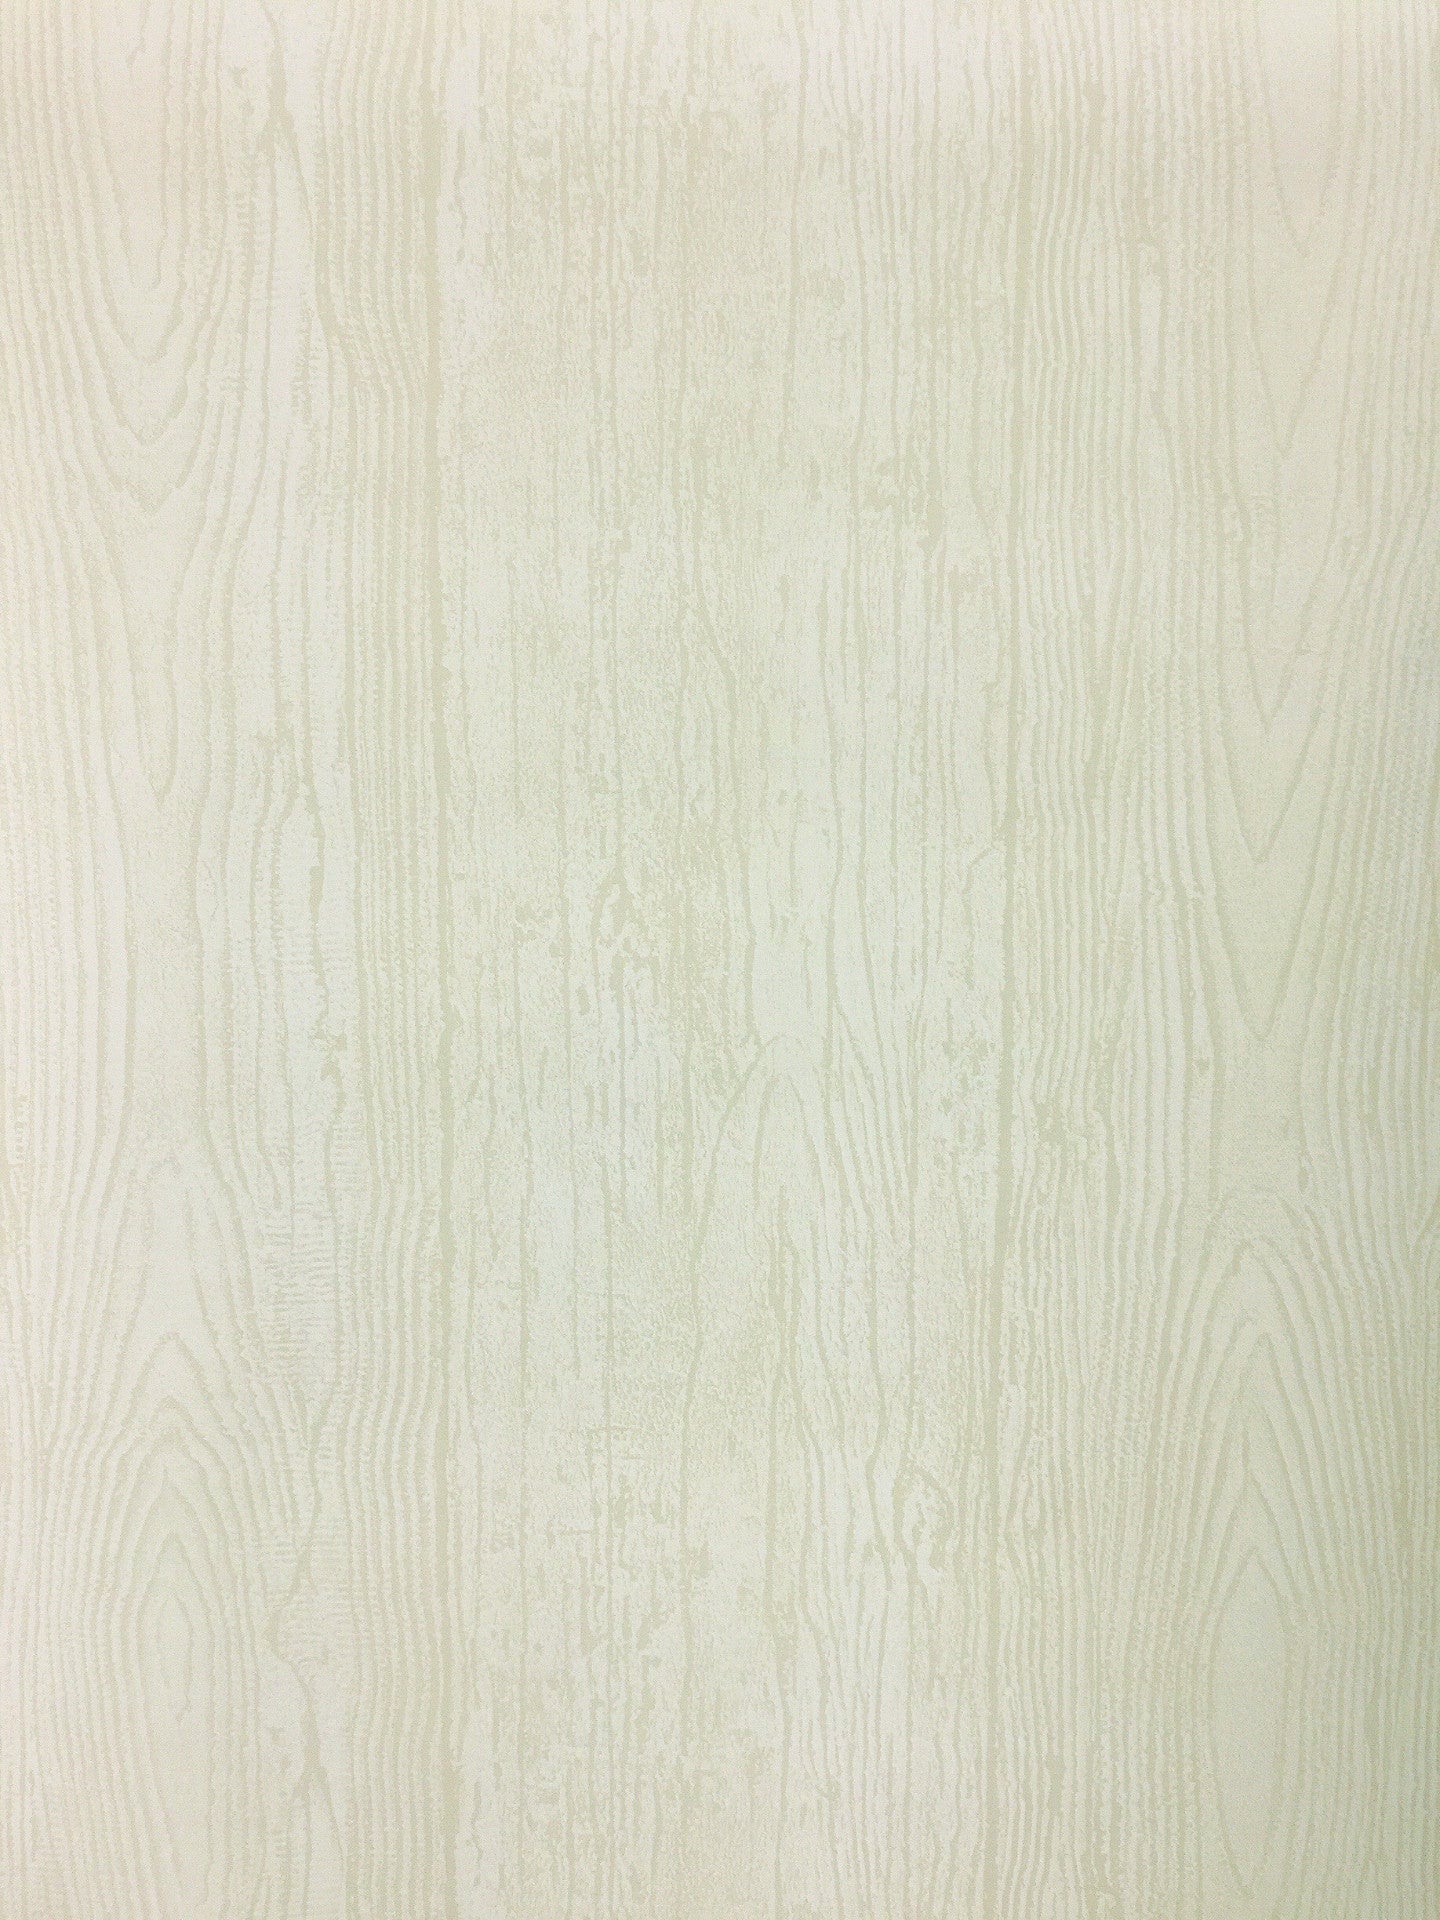 Neutral Wood Texture Wallpaper